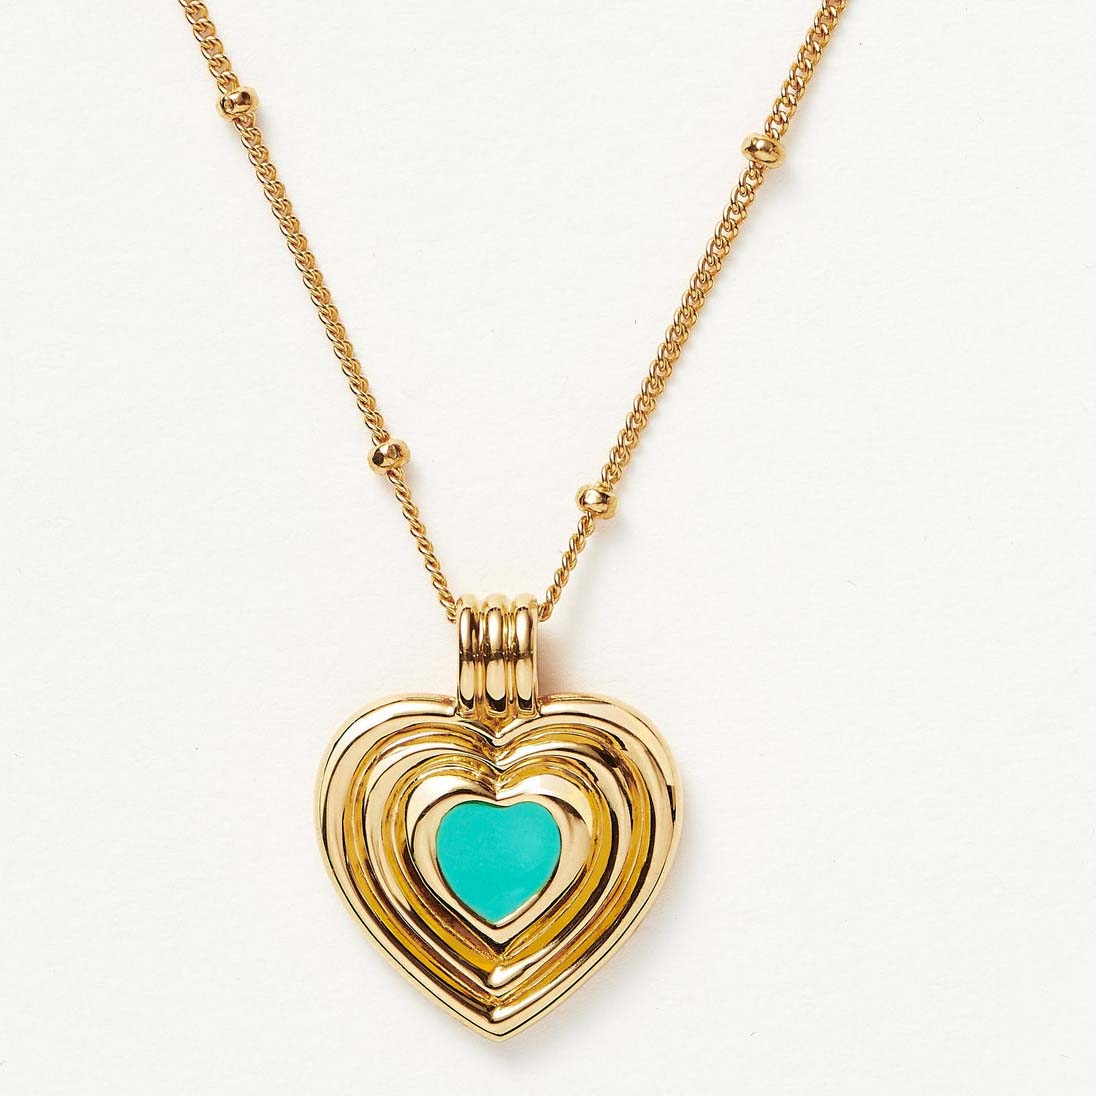 Custom wholesale engravable enamel heart silver pendant necklace in 18K gold plated vermeil